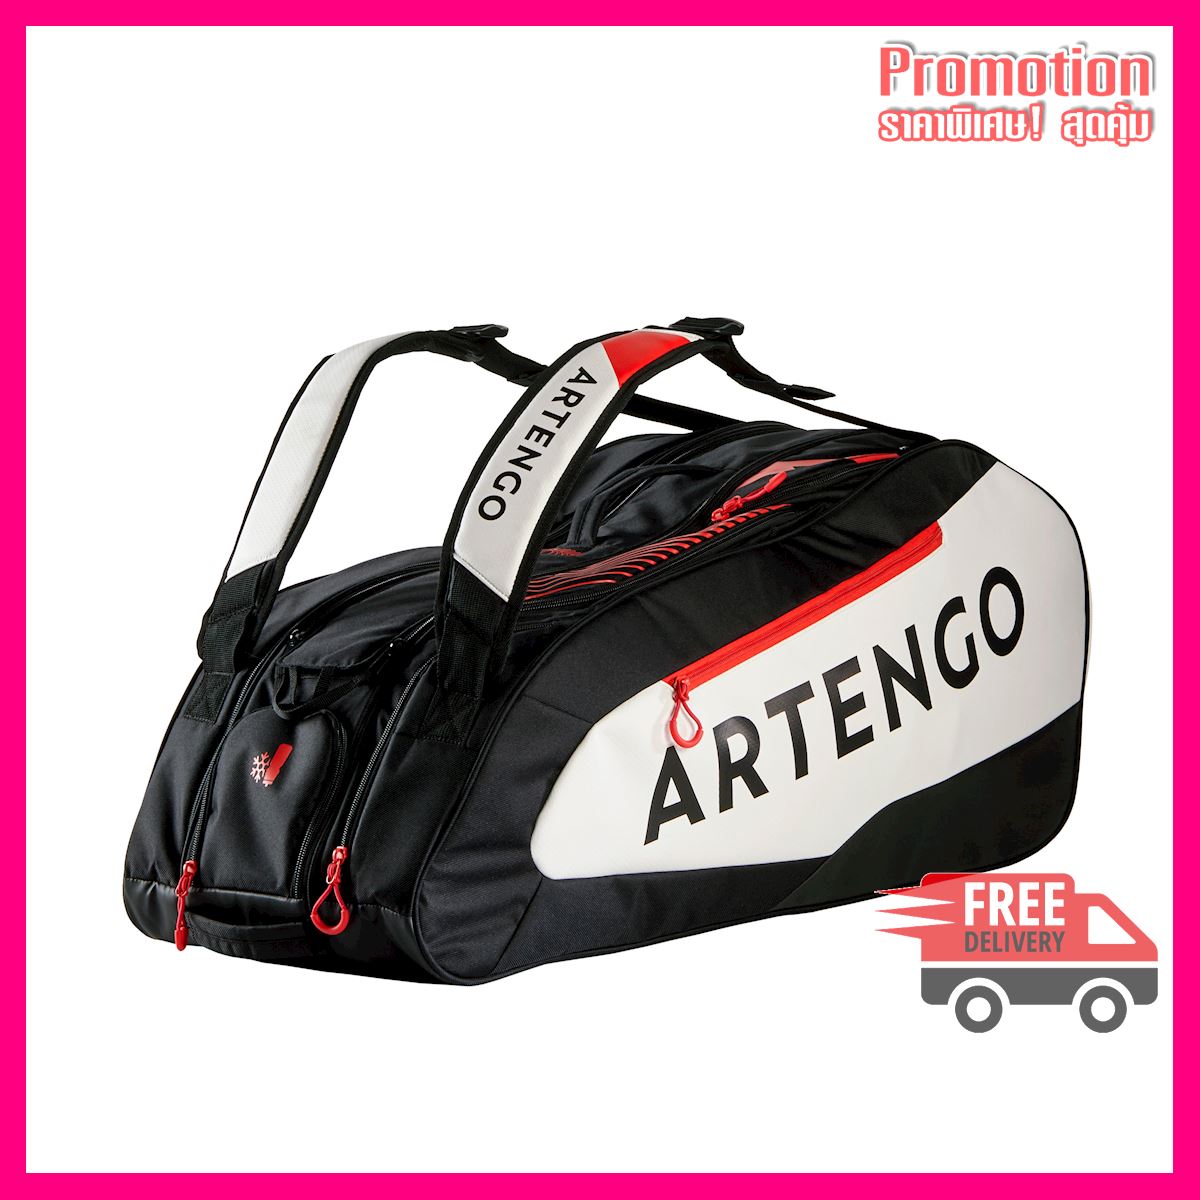 Tennis Bag 9R 930 L - Black/White/Red